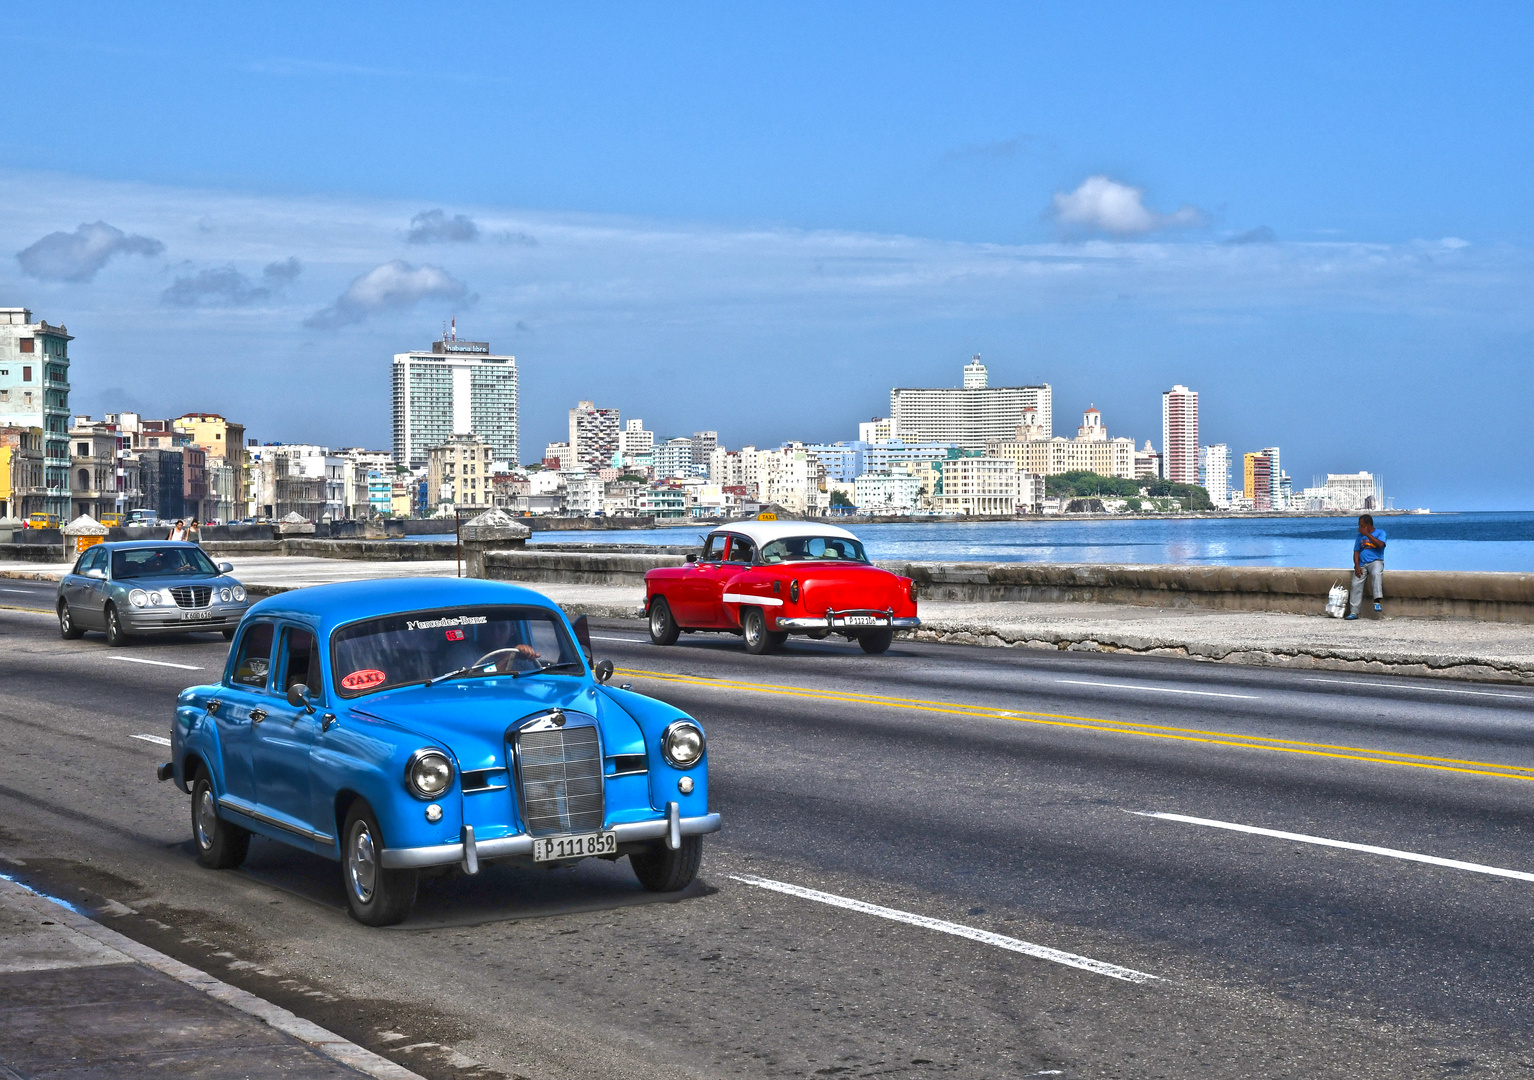 Havanna Taxi # 5